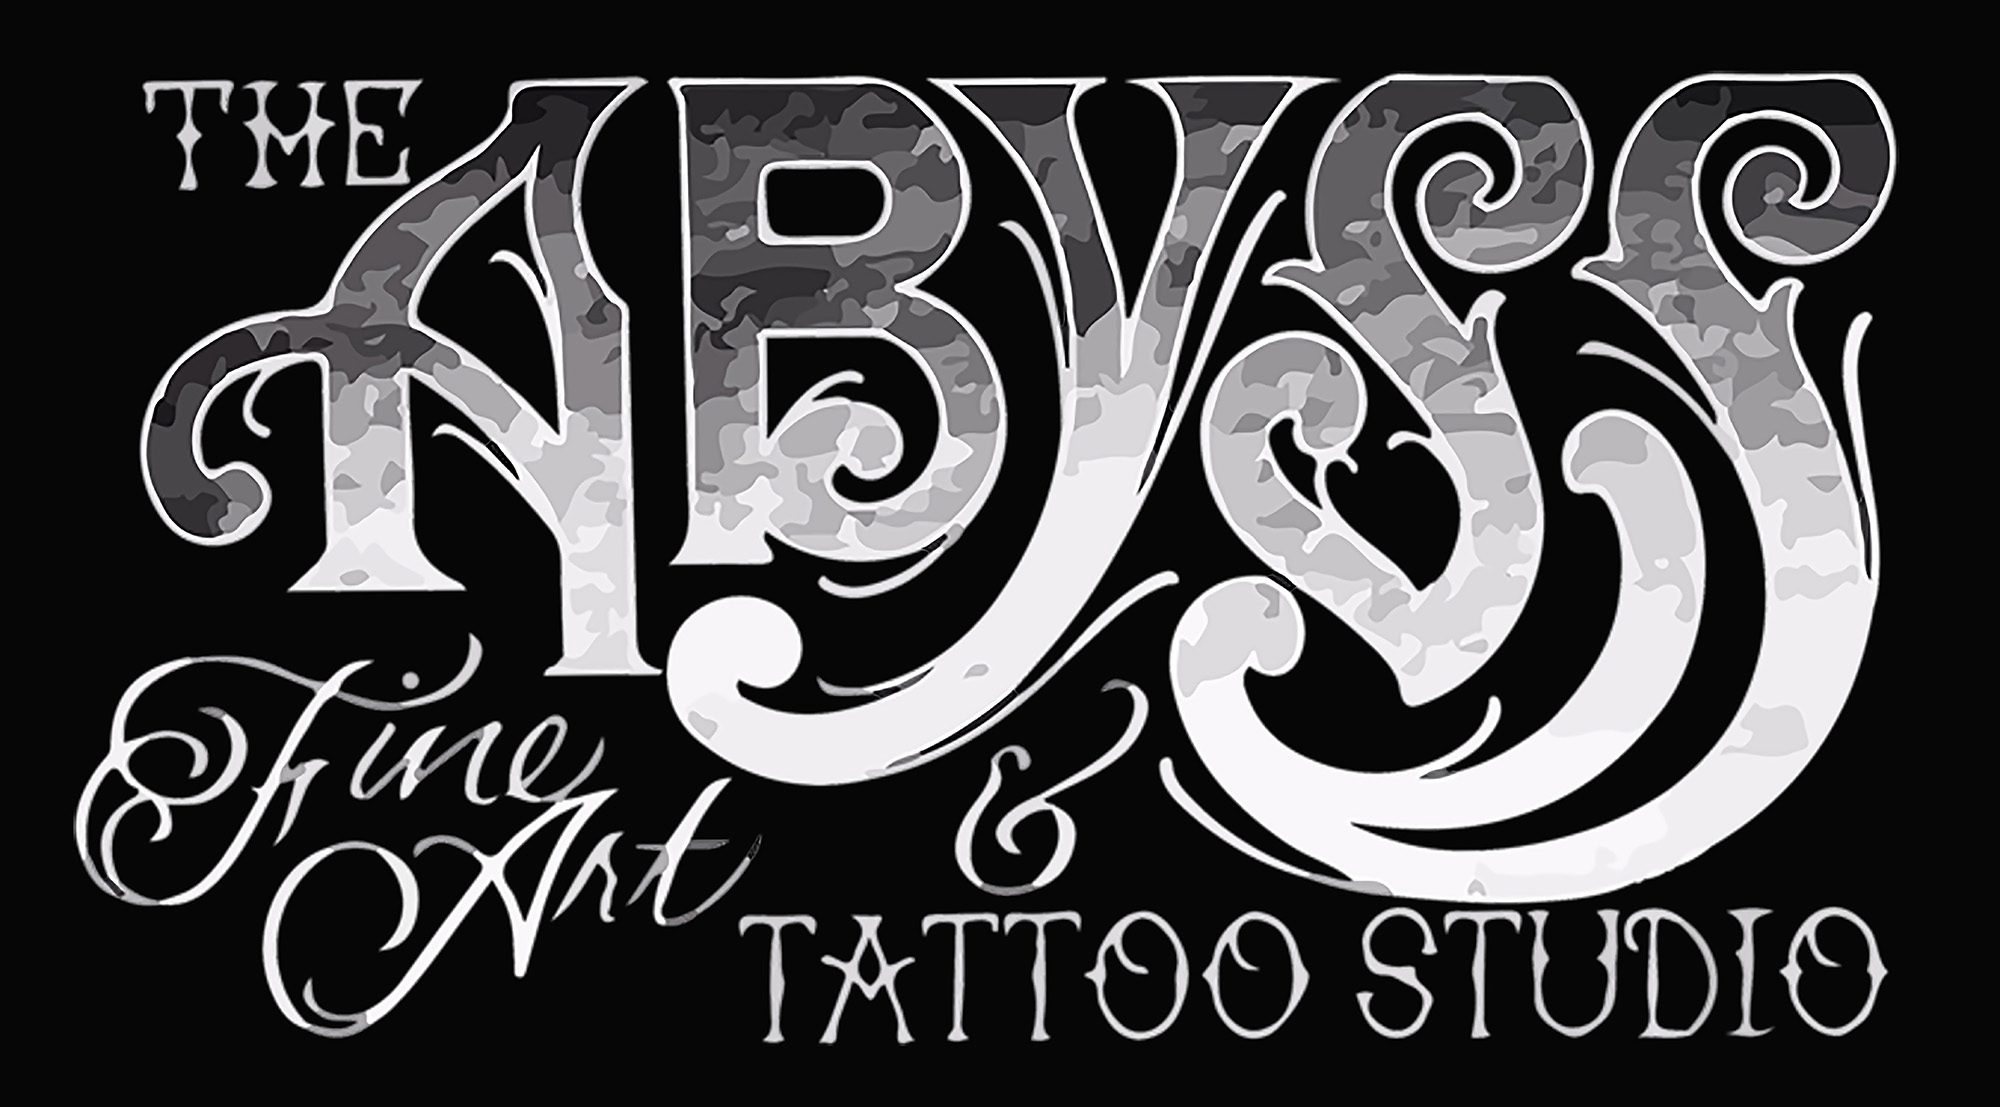 Our Tattoo Studio